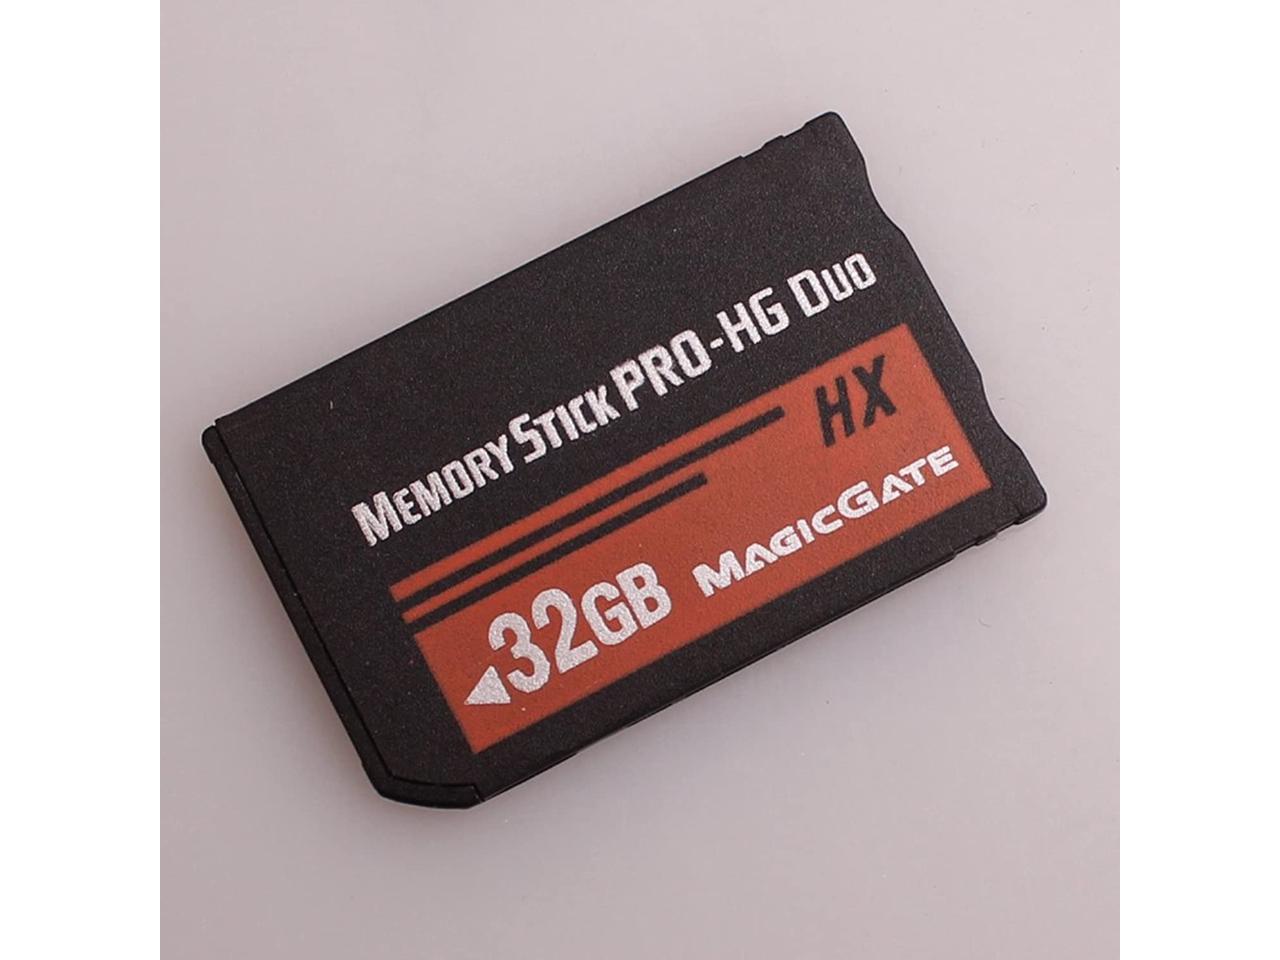 32GB High Speed Memory Stick Pro-HG Duo PSP1000 2000 3000/Camera Memory Card MS-HX32A 